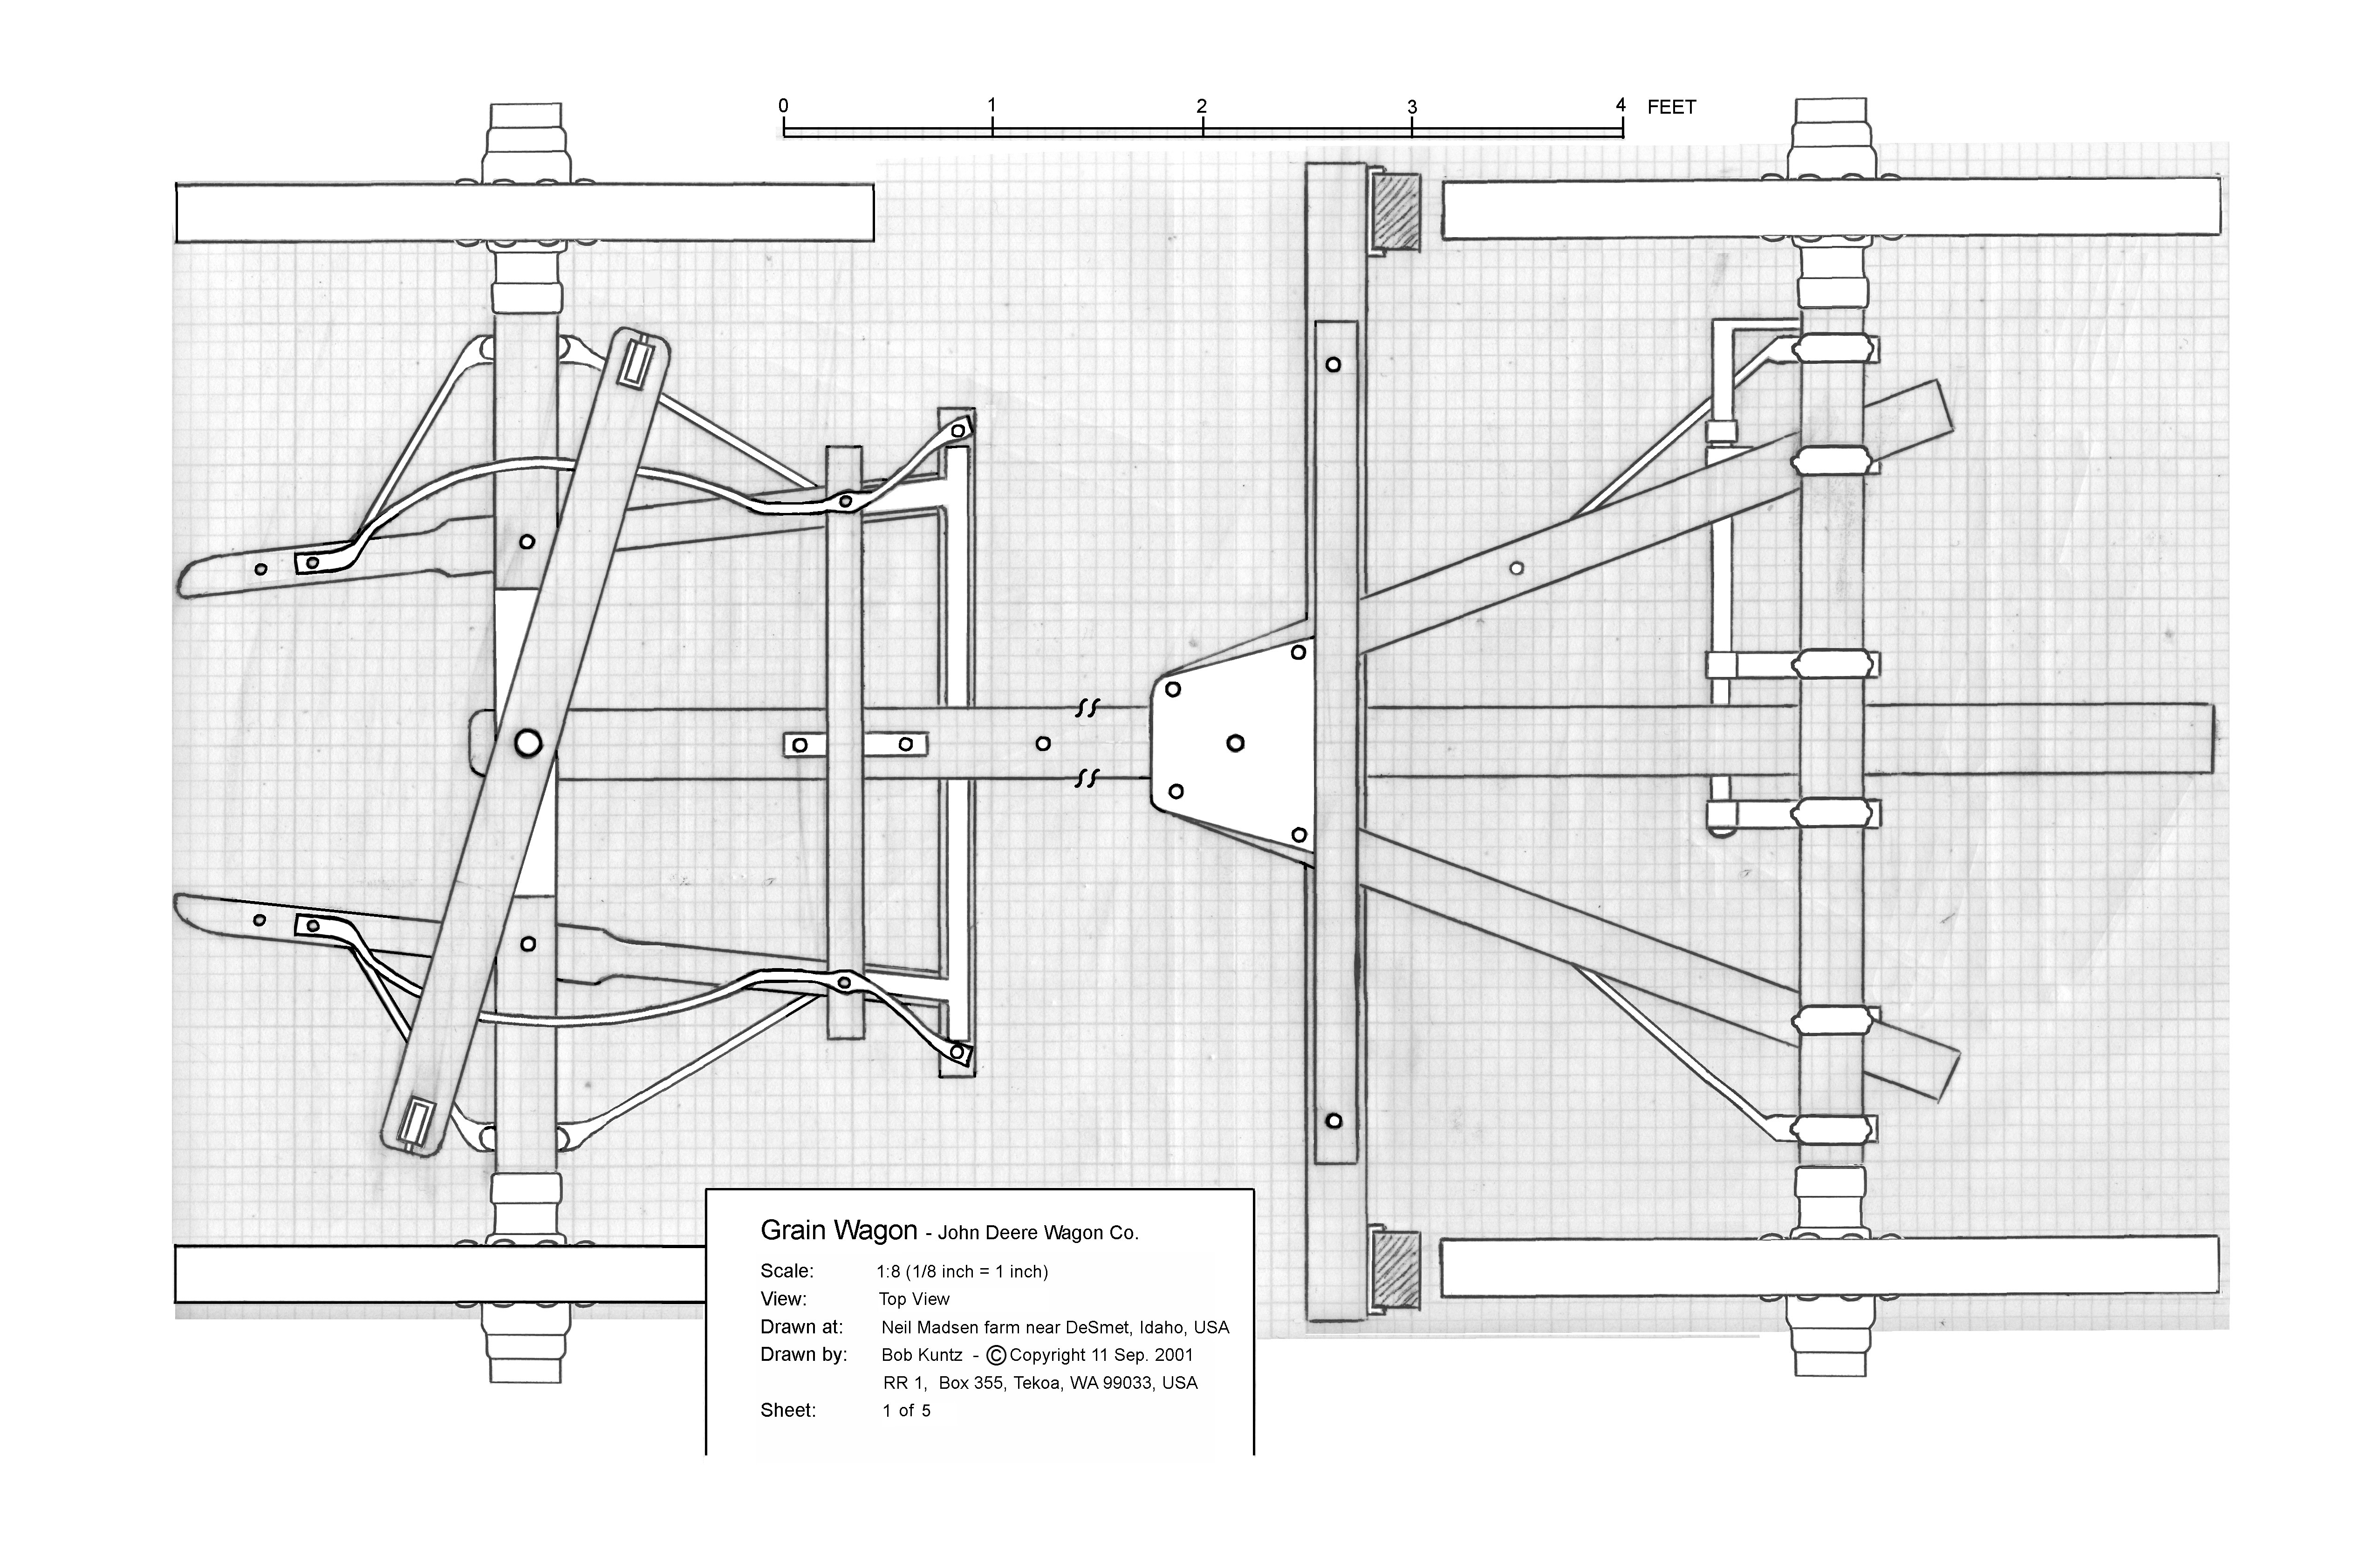 John Deere Wagon Co - Grain Wagon Plans - Sheet 1 